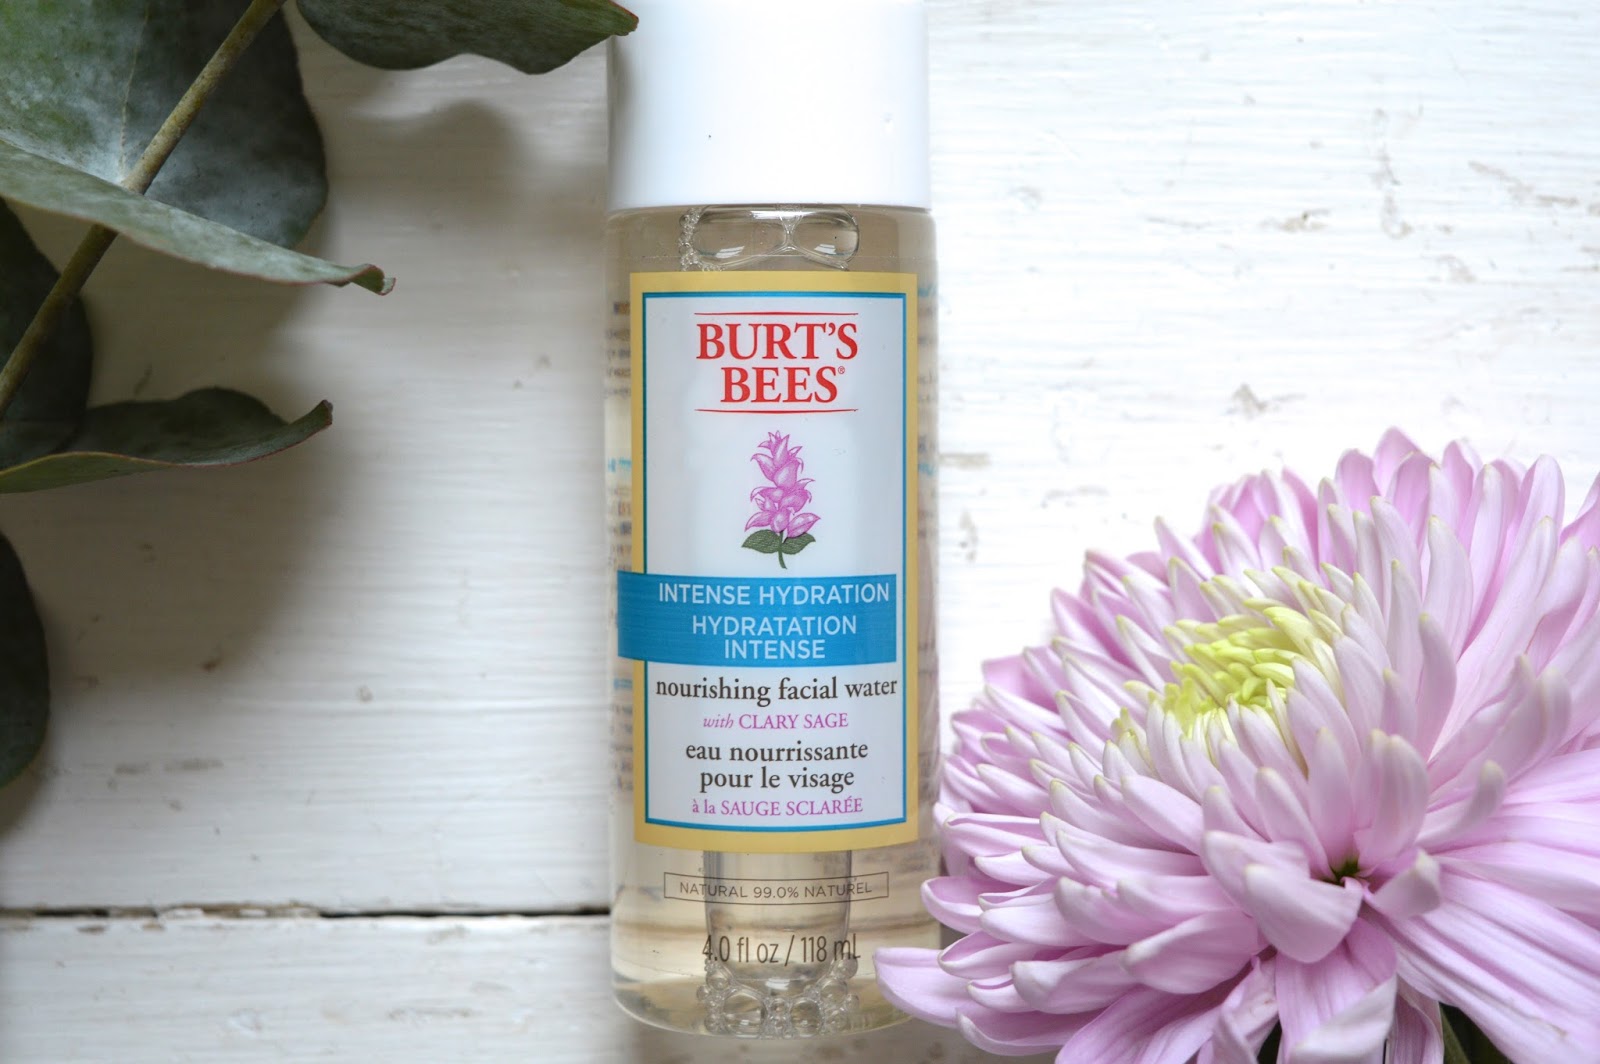 Burt's Bees Intense Hydration Nourishing Facial Water Review, beauty bloggers, Hampshire bloggers, UK beauty blog, Dalry Rose Blog